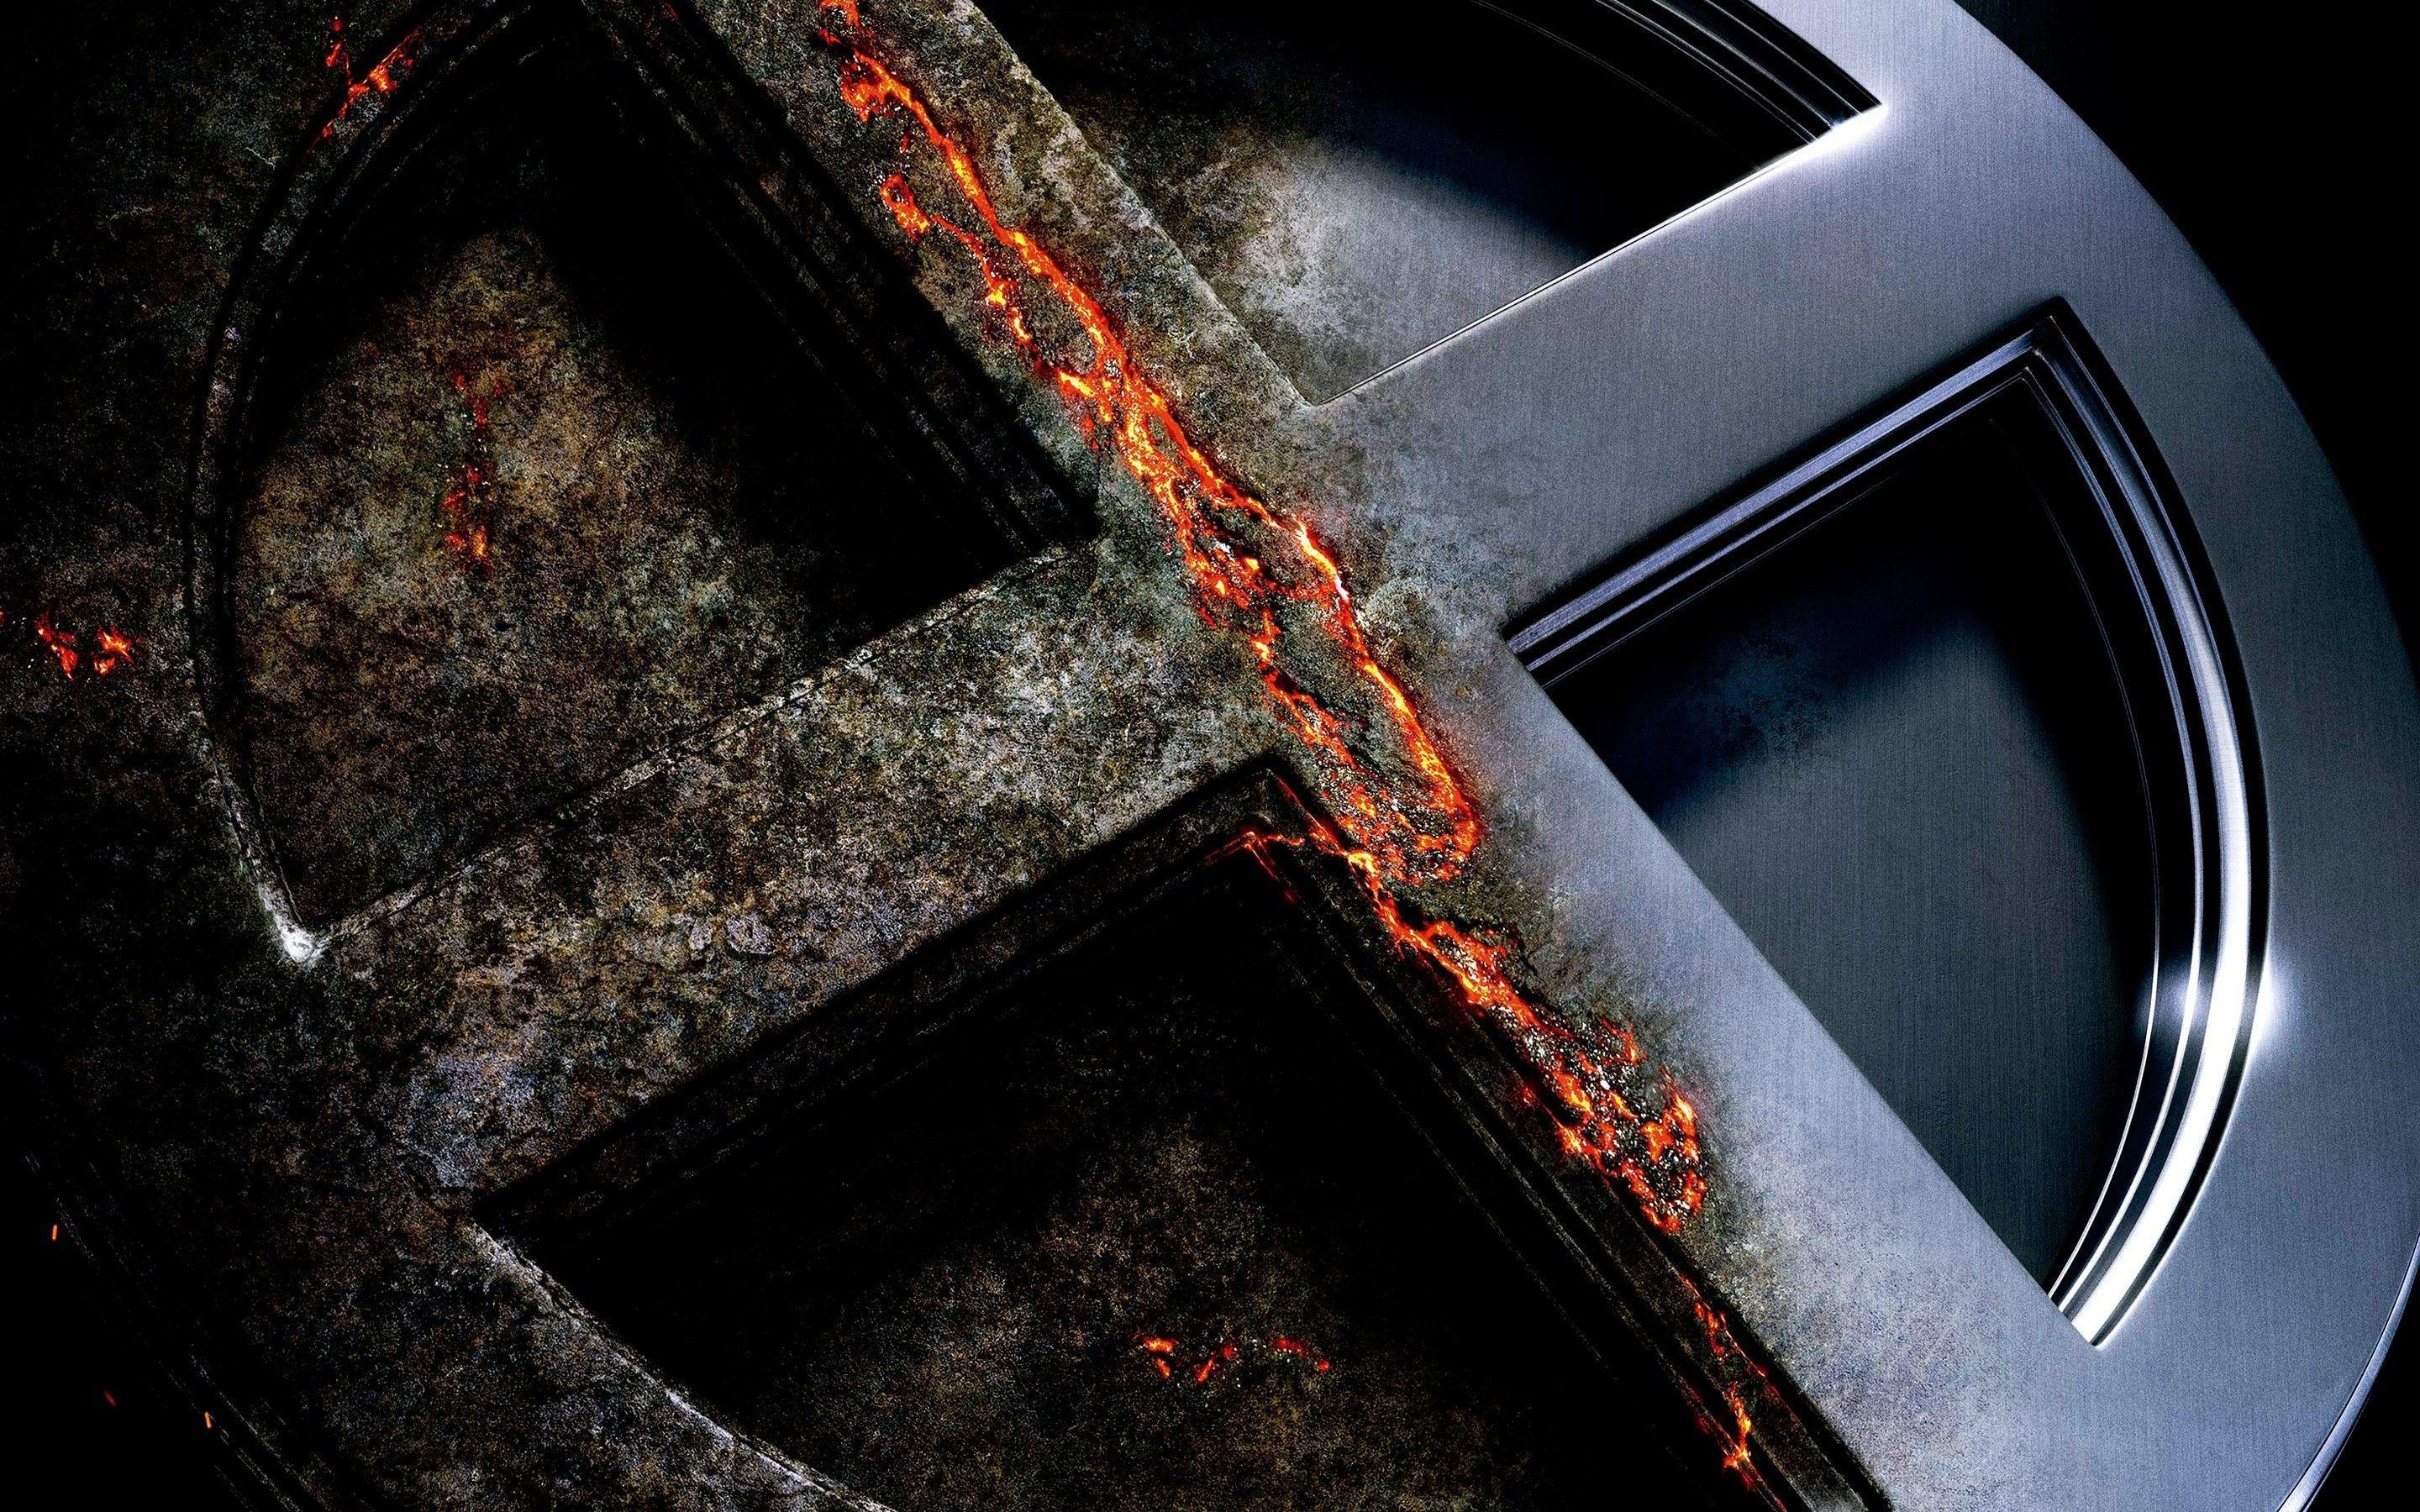 Excellent High Definition Wallpaper's Collection: X Men Apocalypse